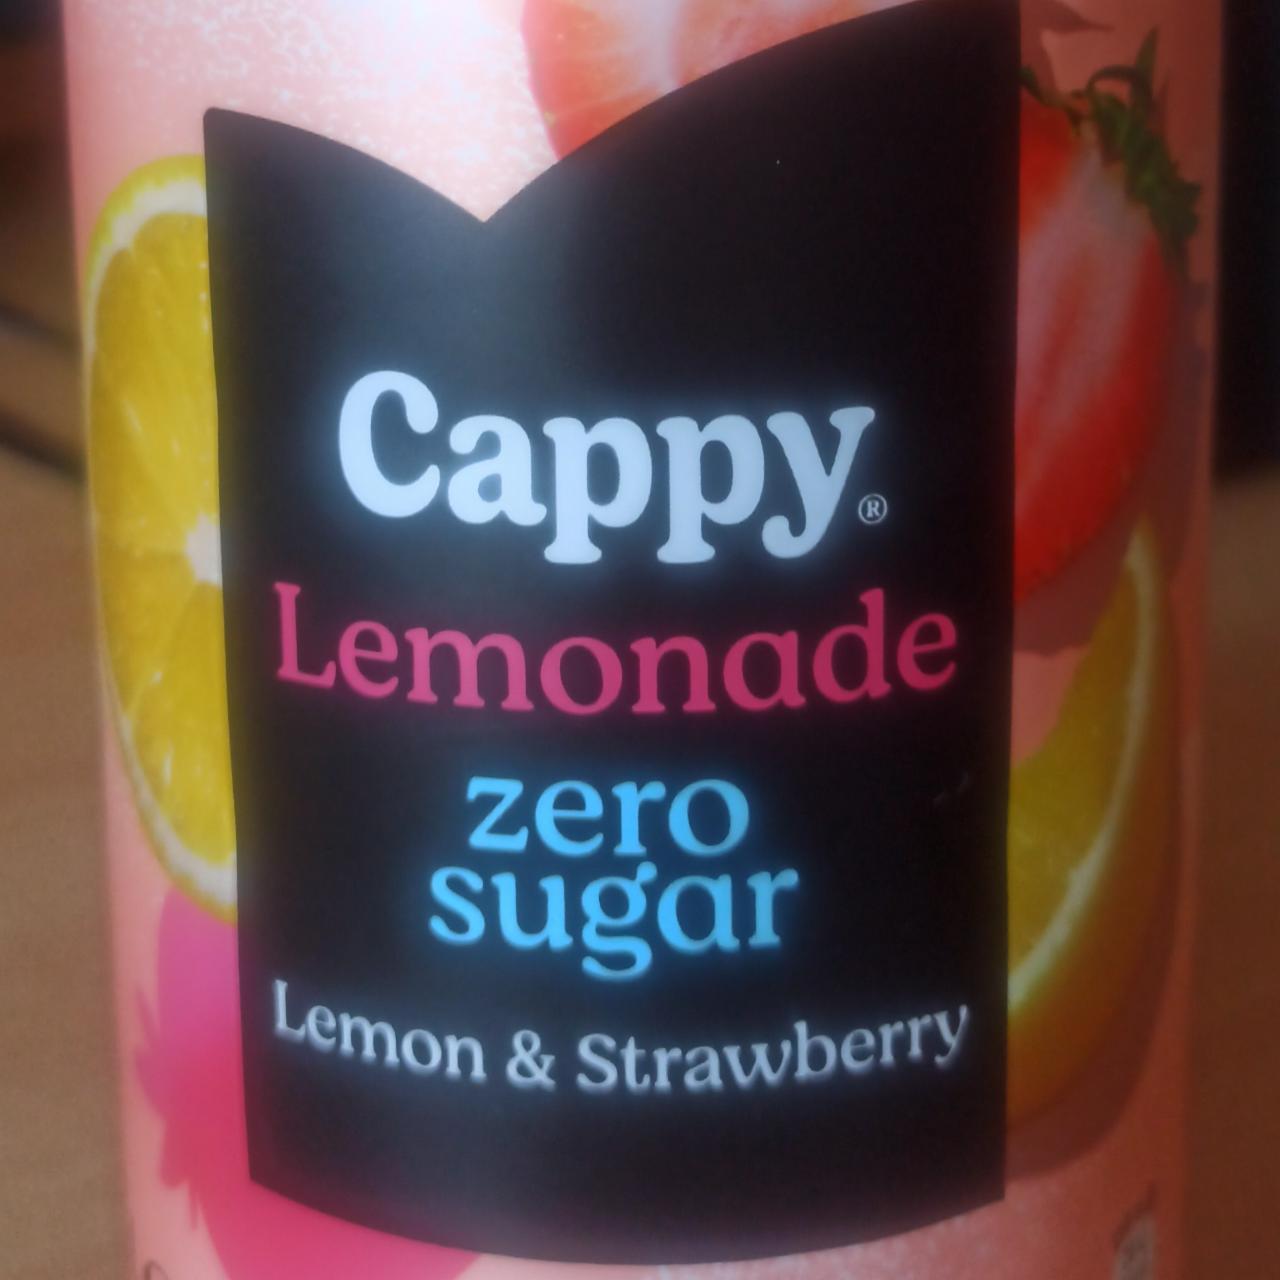 Képek - Cappy lemonade zero sugar Lemon & strawberry